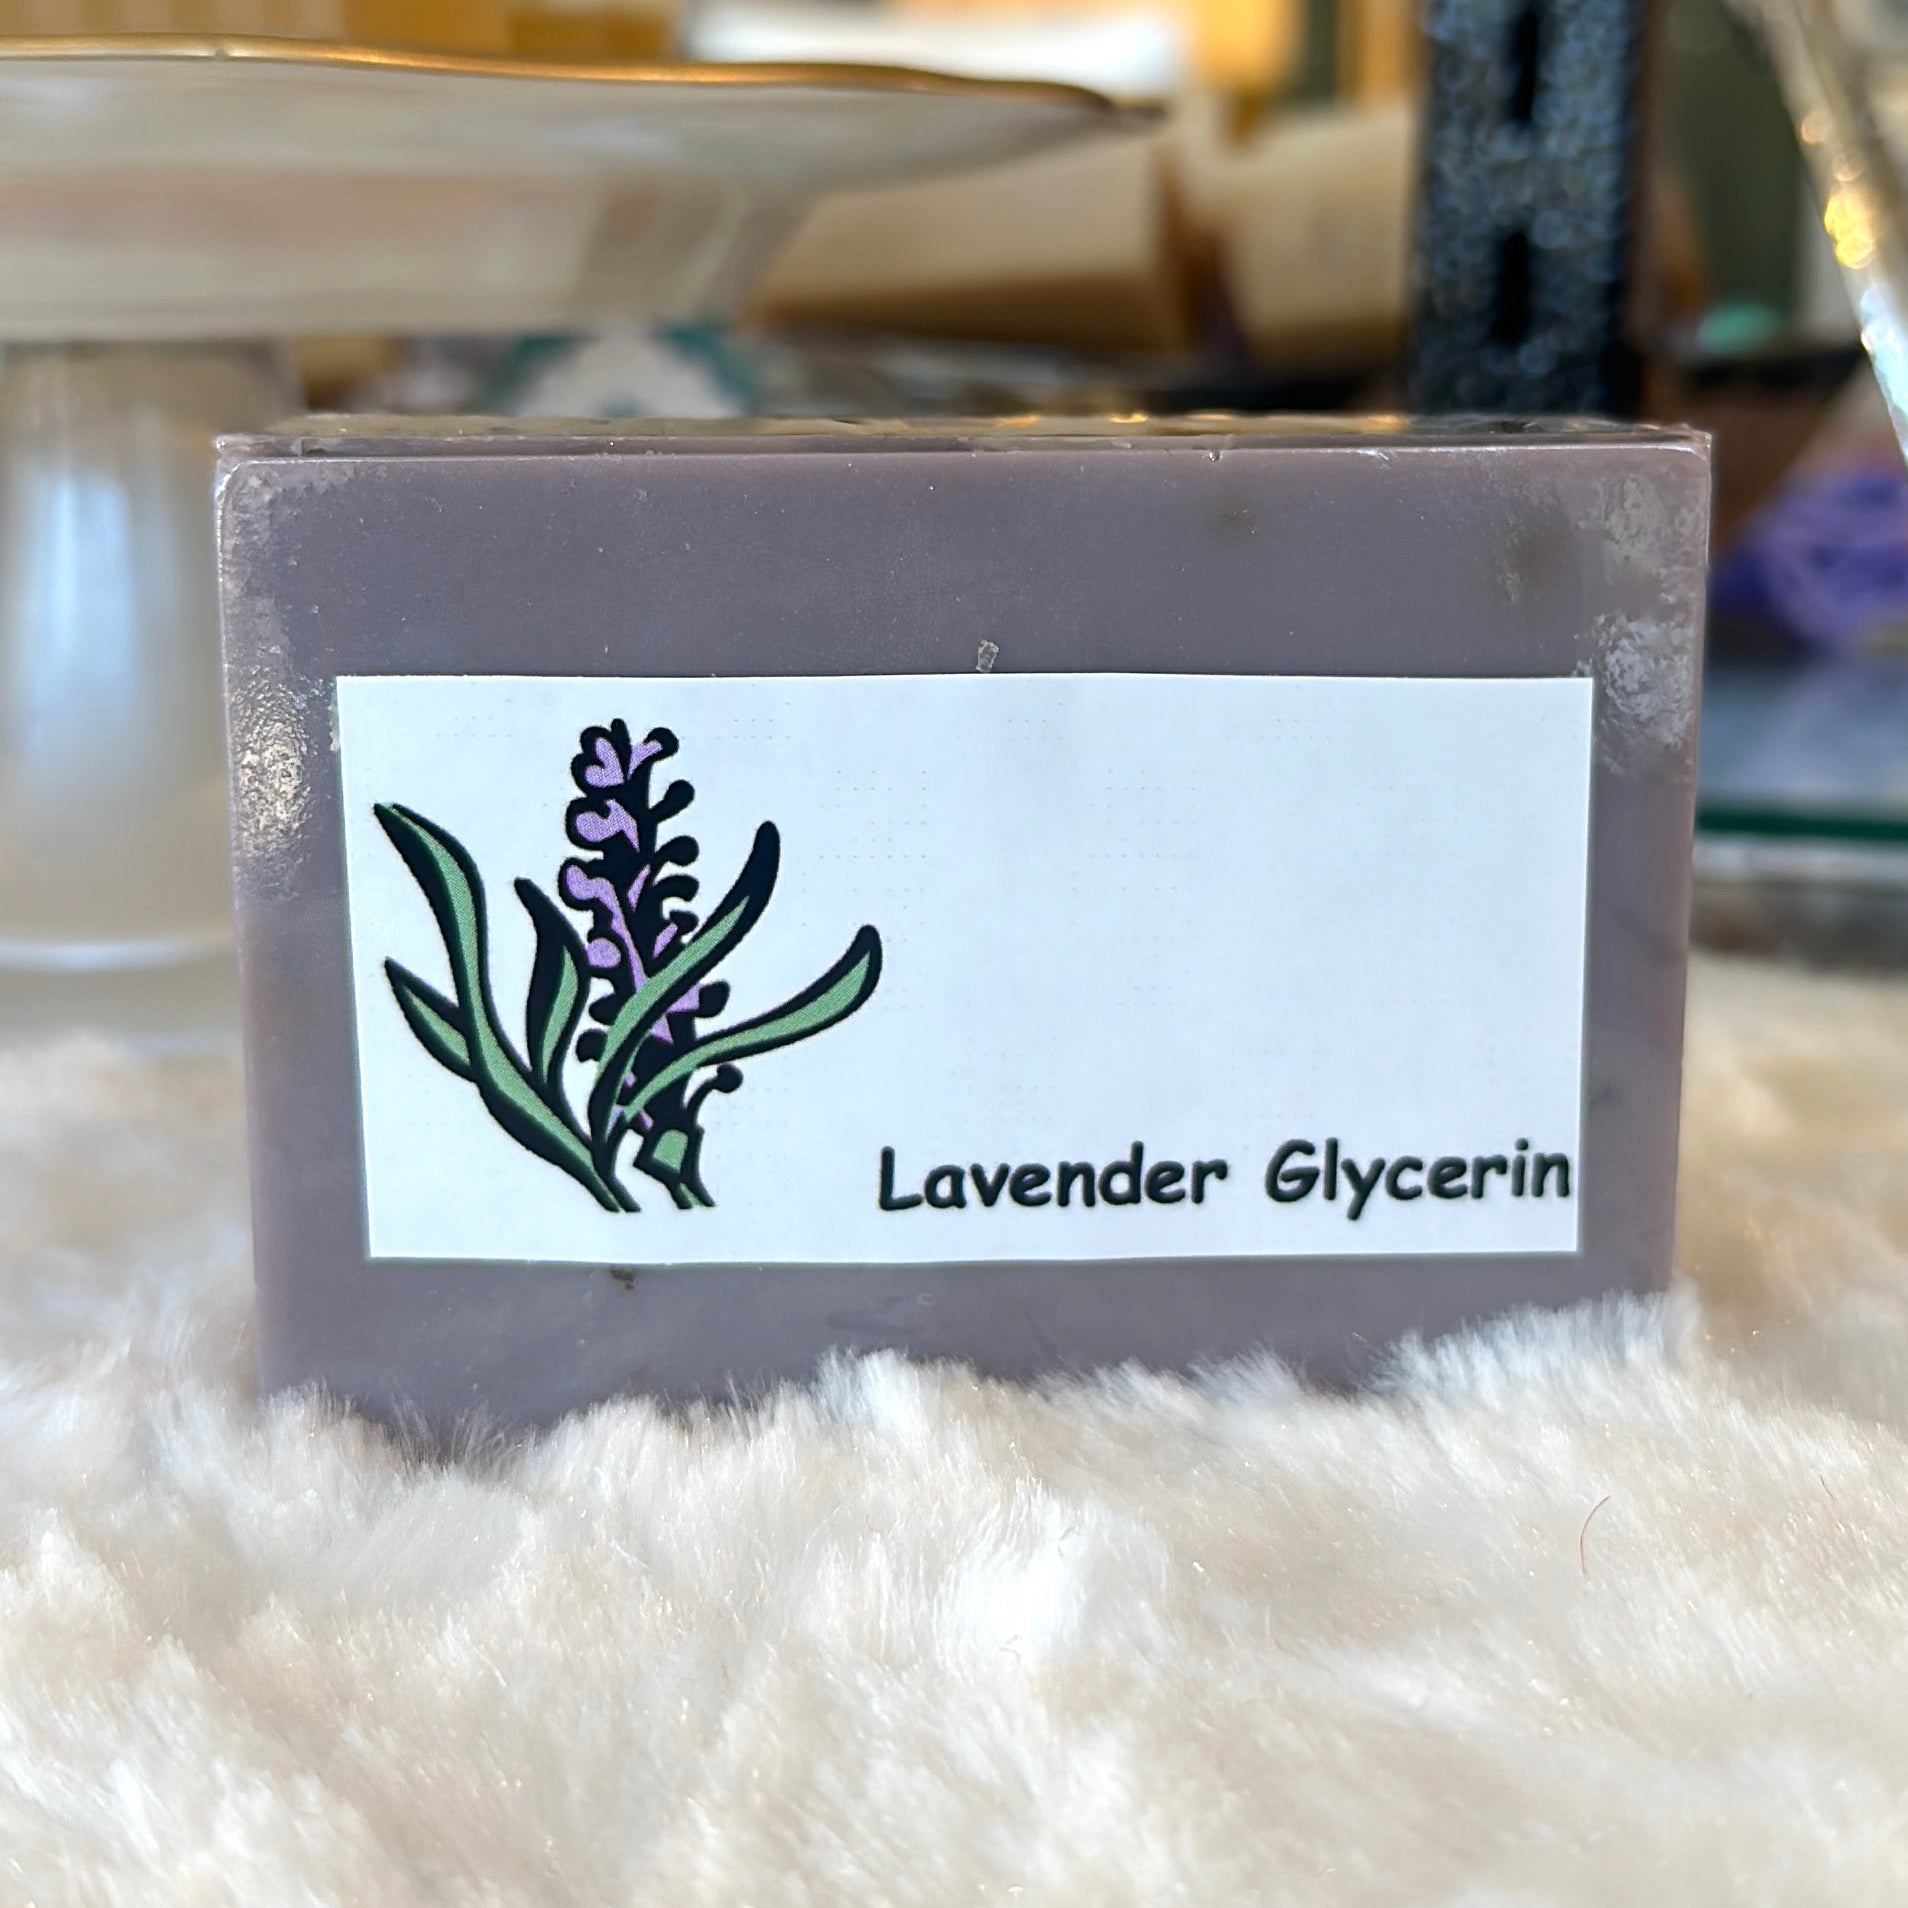 Glycerin Soaps – The Little Soapmaker